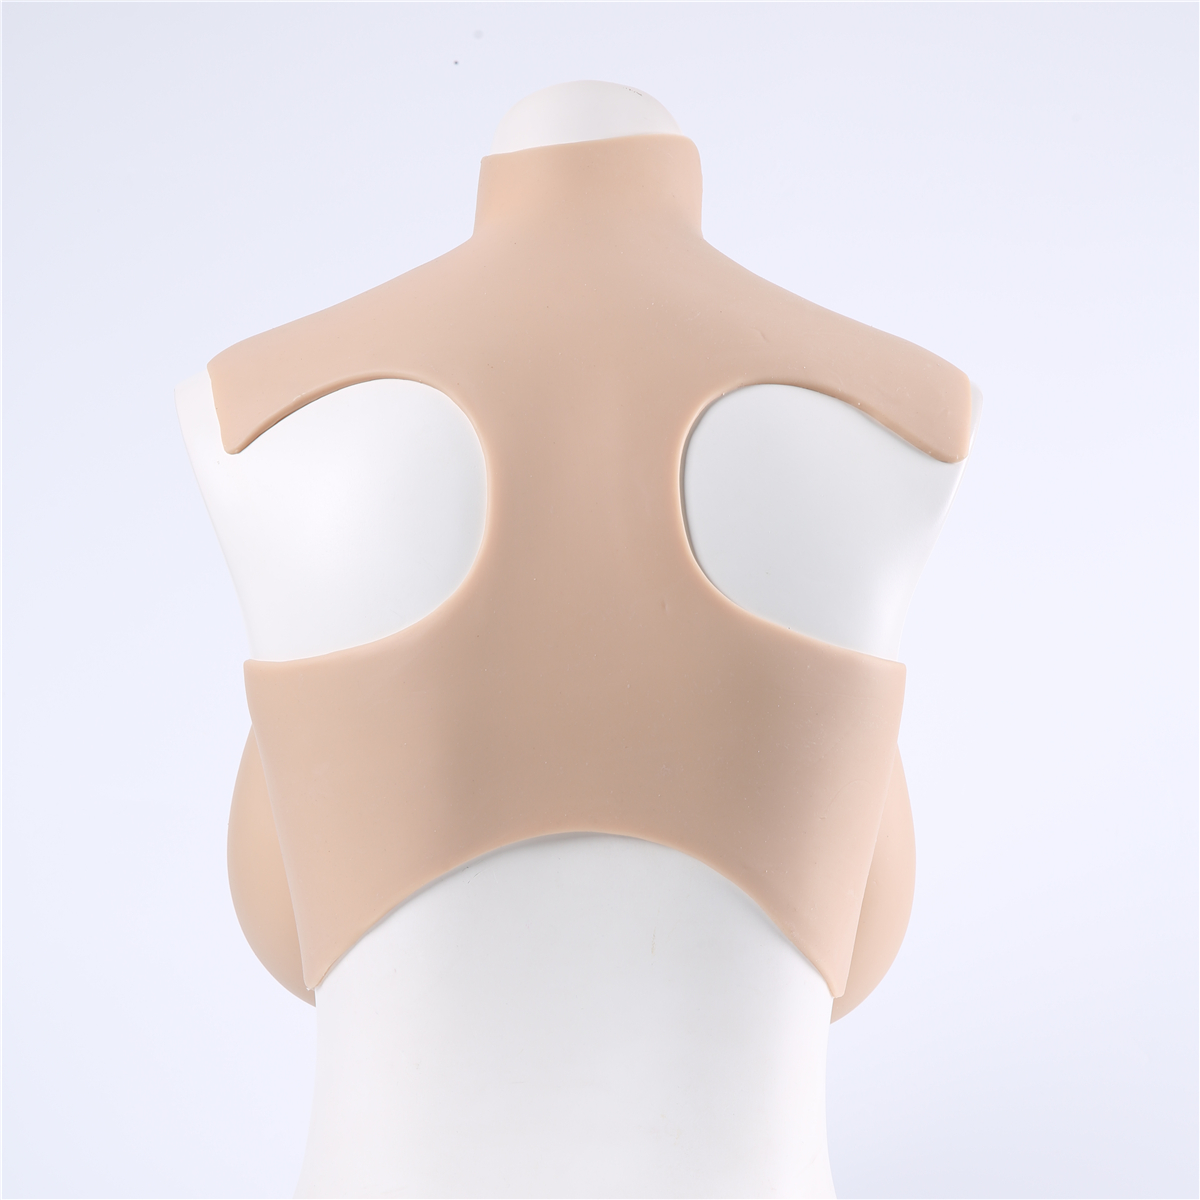 Cheap i-cup silicone breastplate realistic